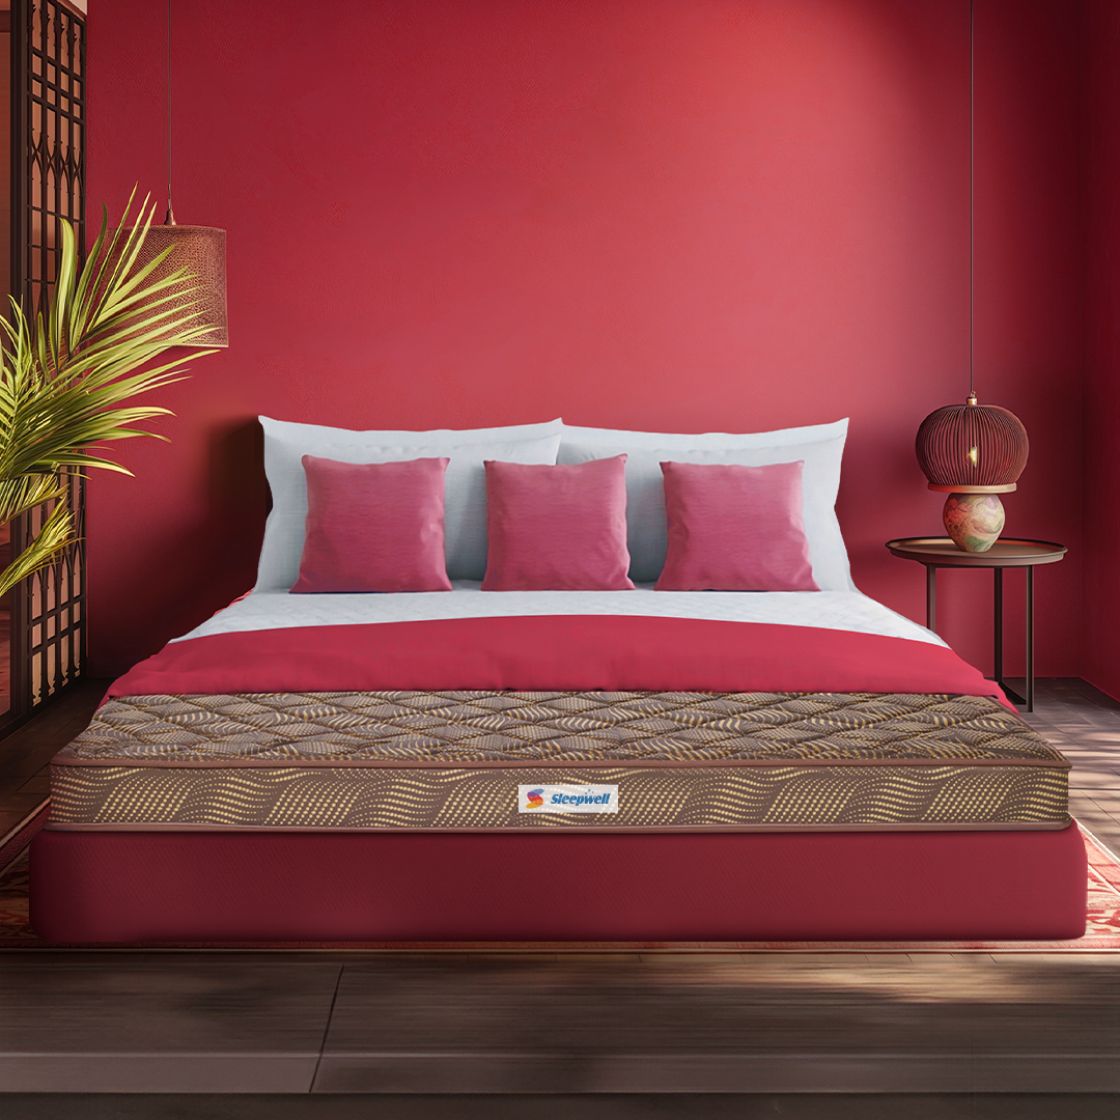 Sleepwell  Champ-Superior PU Foam | 5-inch King Bed Size | Medium Firm | Anti Sag Tech Mattress (Brown, 75x72x5)